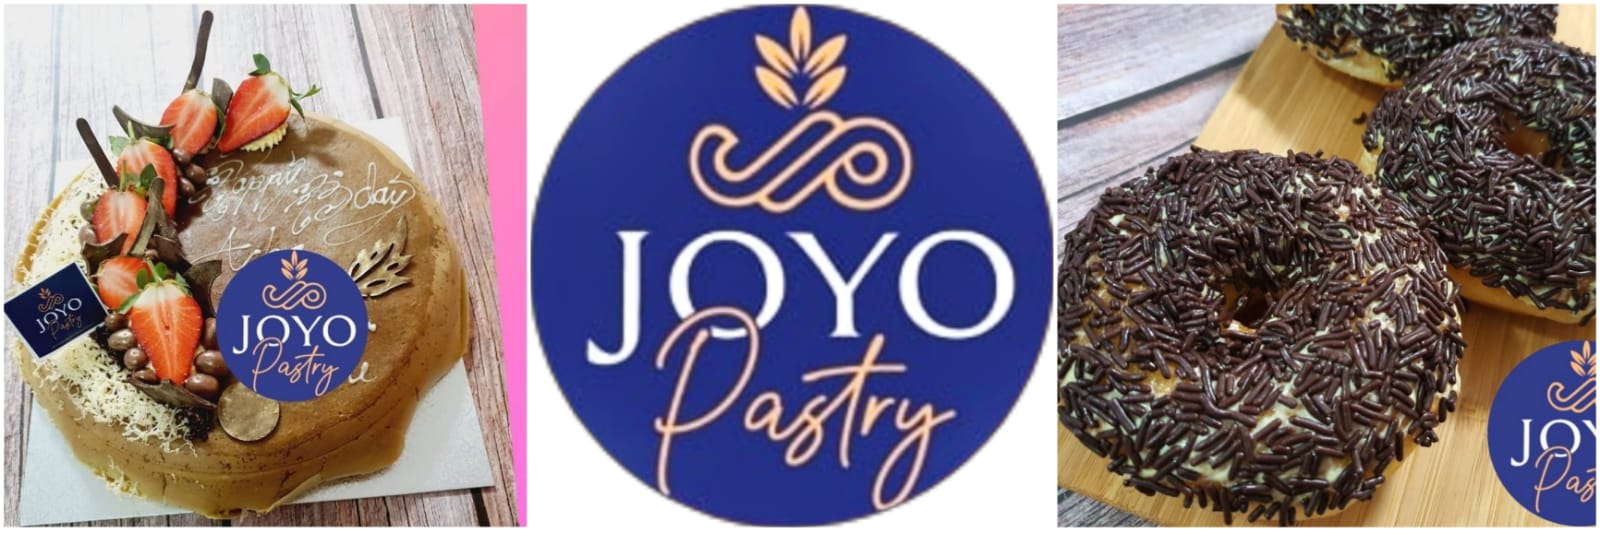 joyo logo